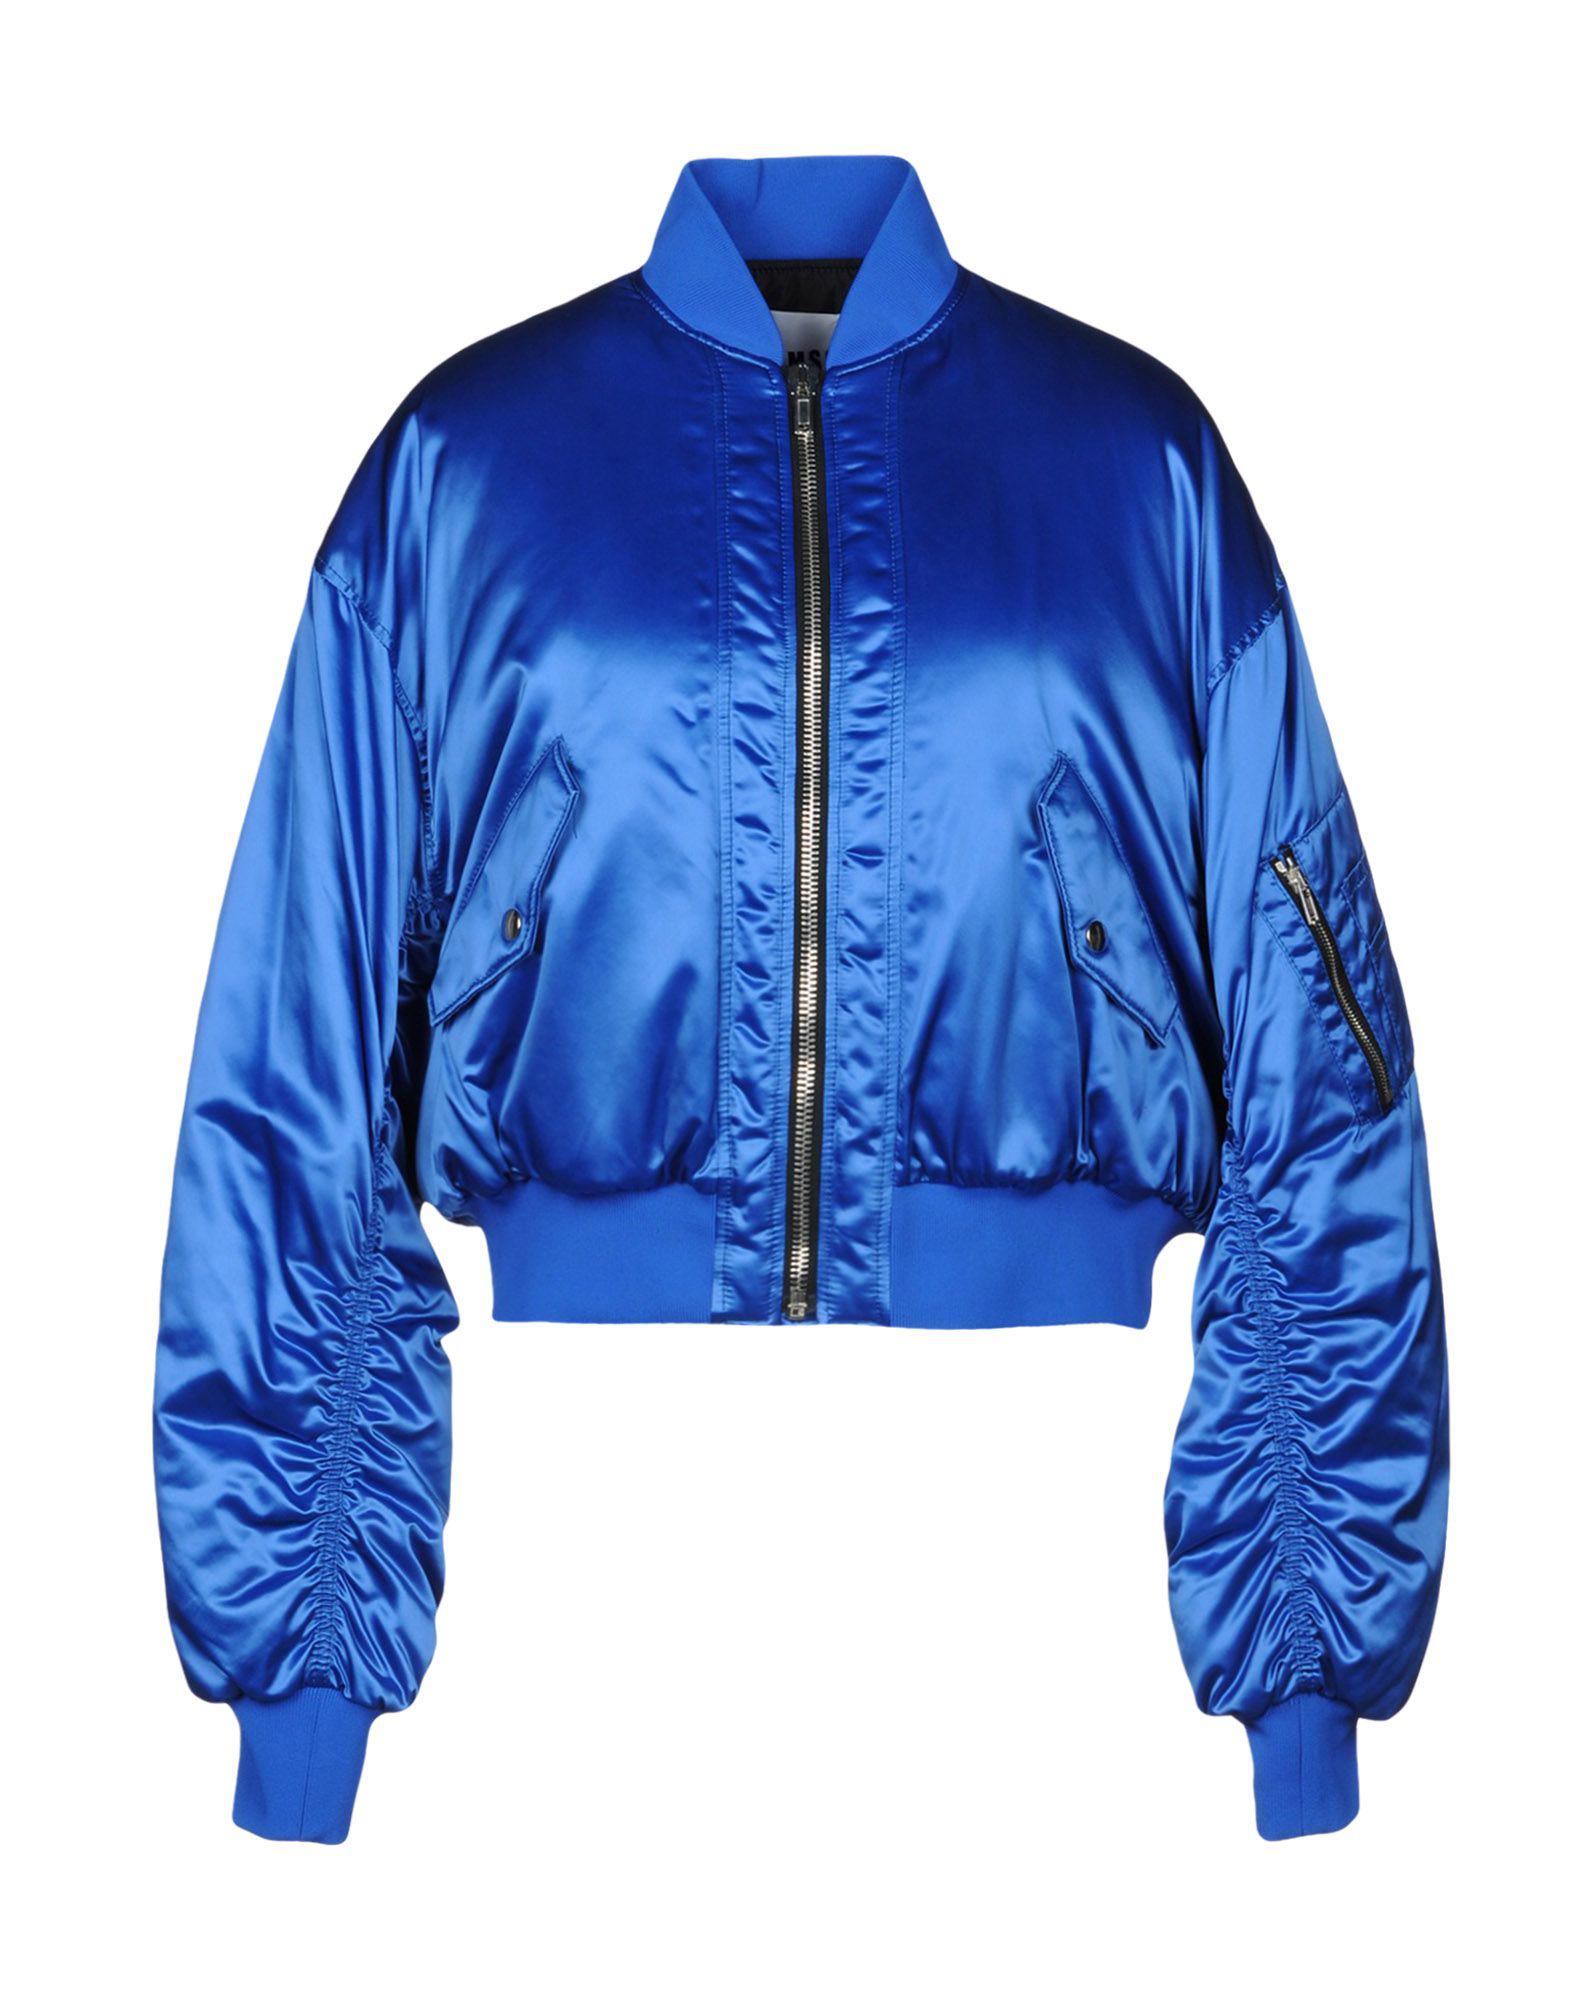 MSGM Satin Jacket in Blue - Lyst